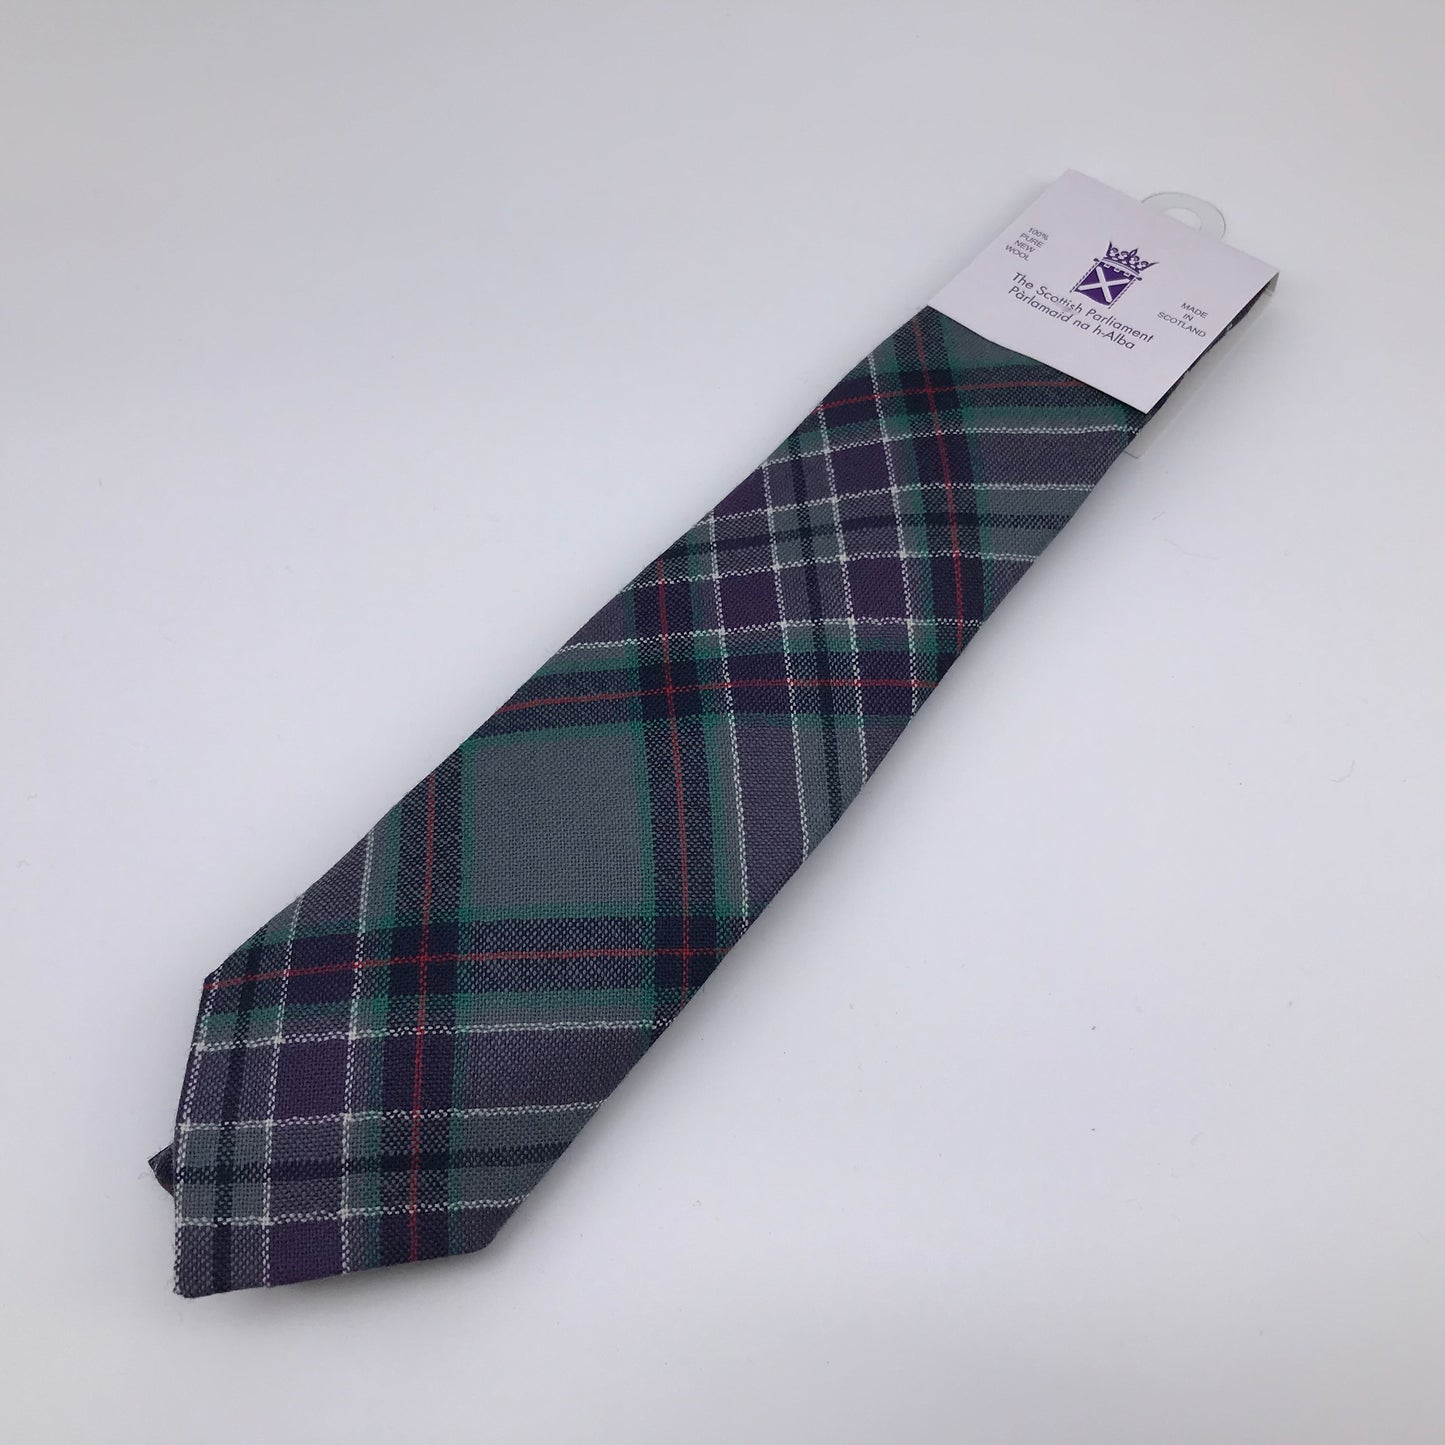 Tartan tie with label.